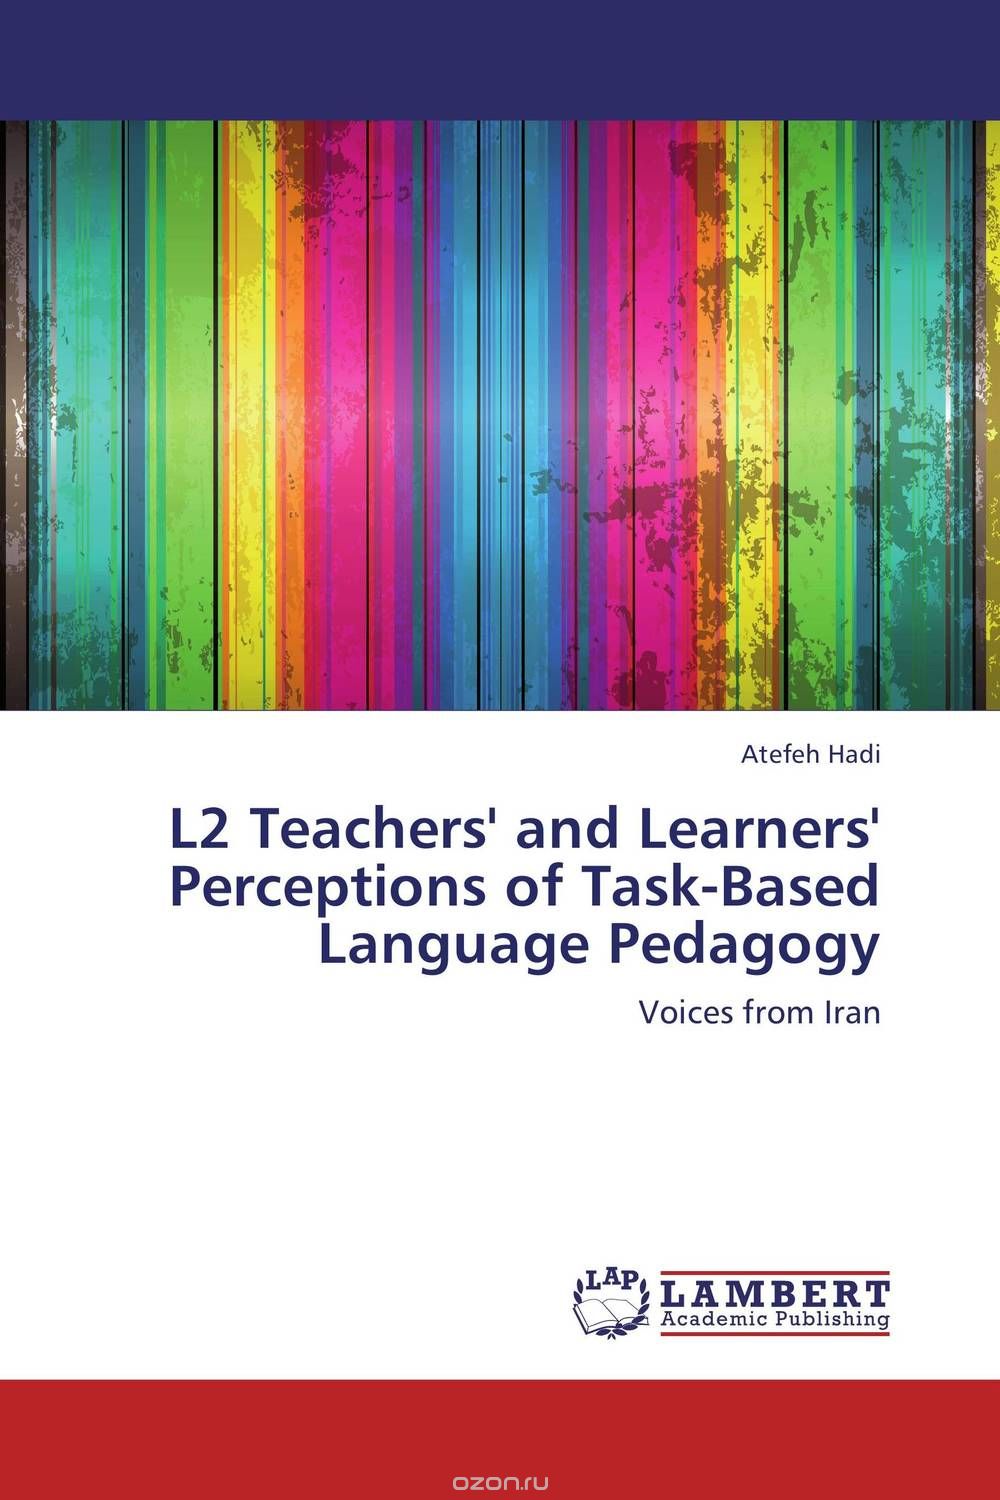 L2 Teachers' and Learners' Perceptions of Task-Based Language Pedagogy